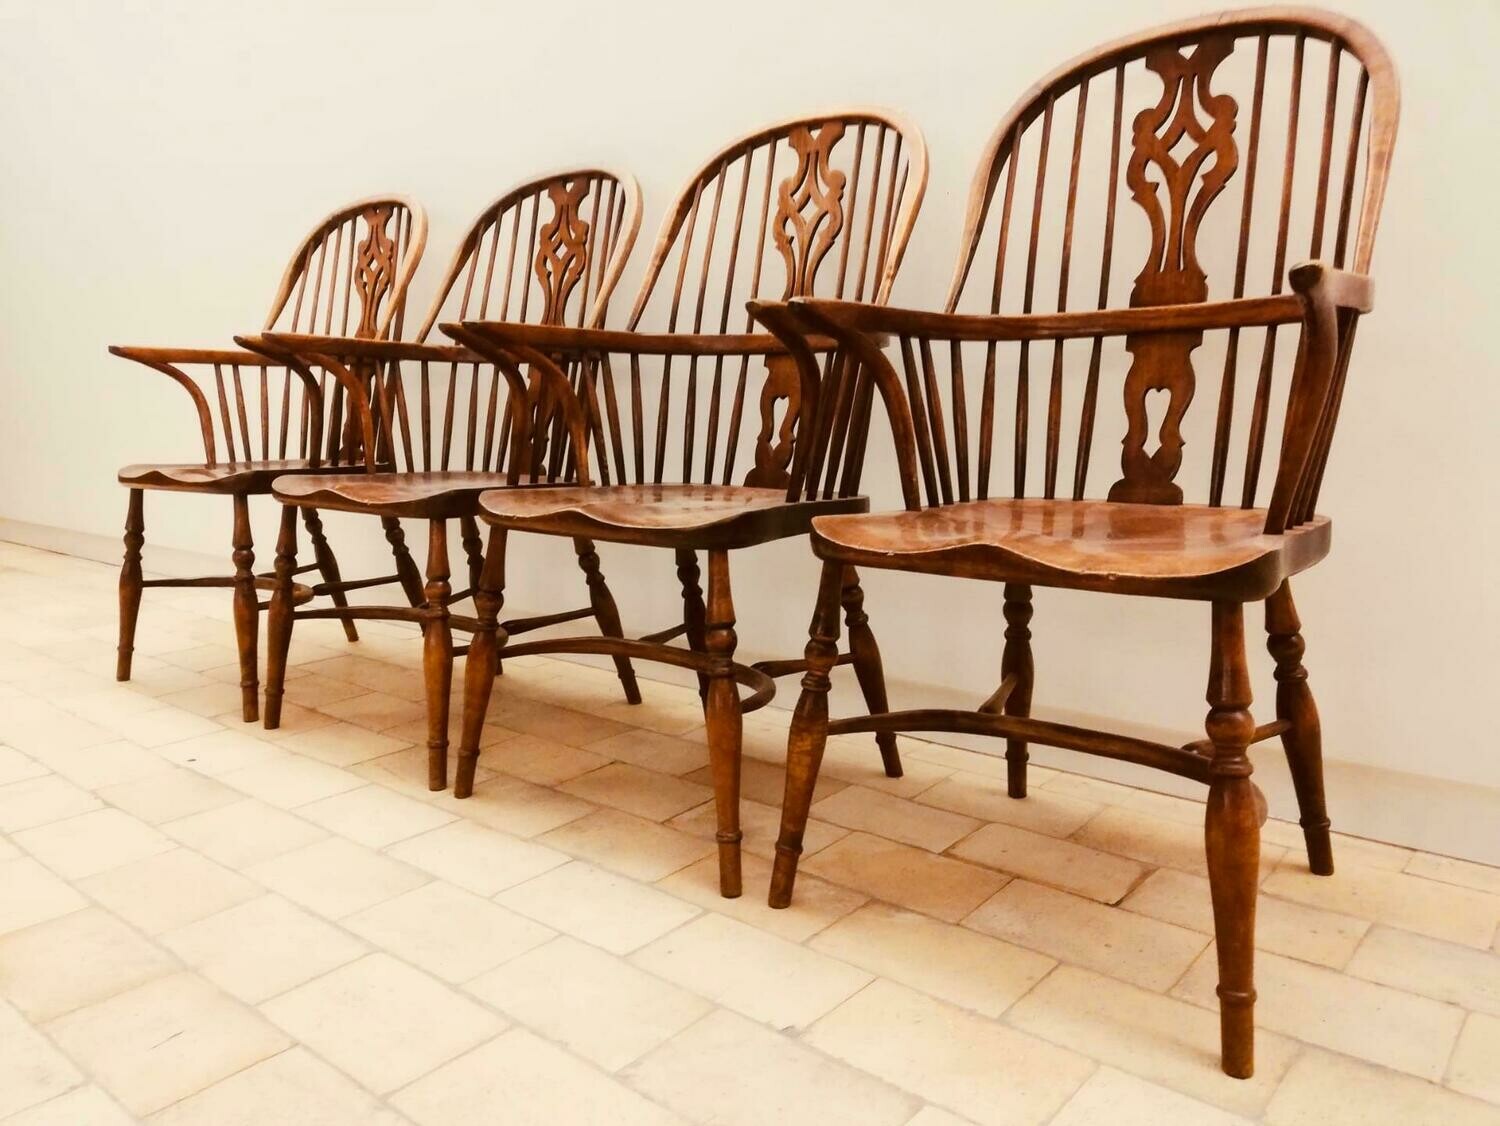 4 Windsor stoelen ( eind 19e eeuw )